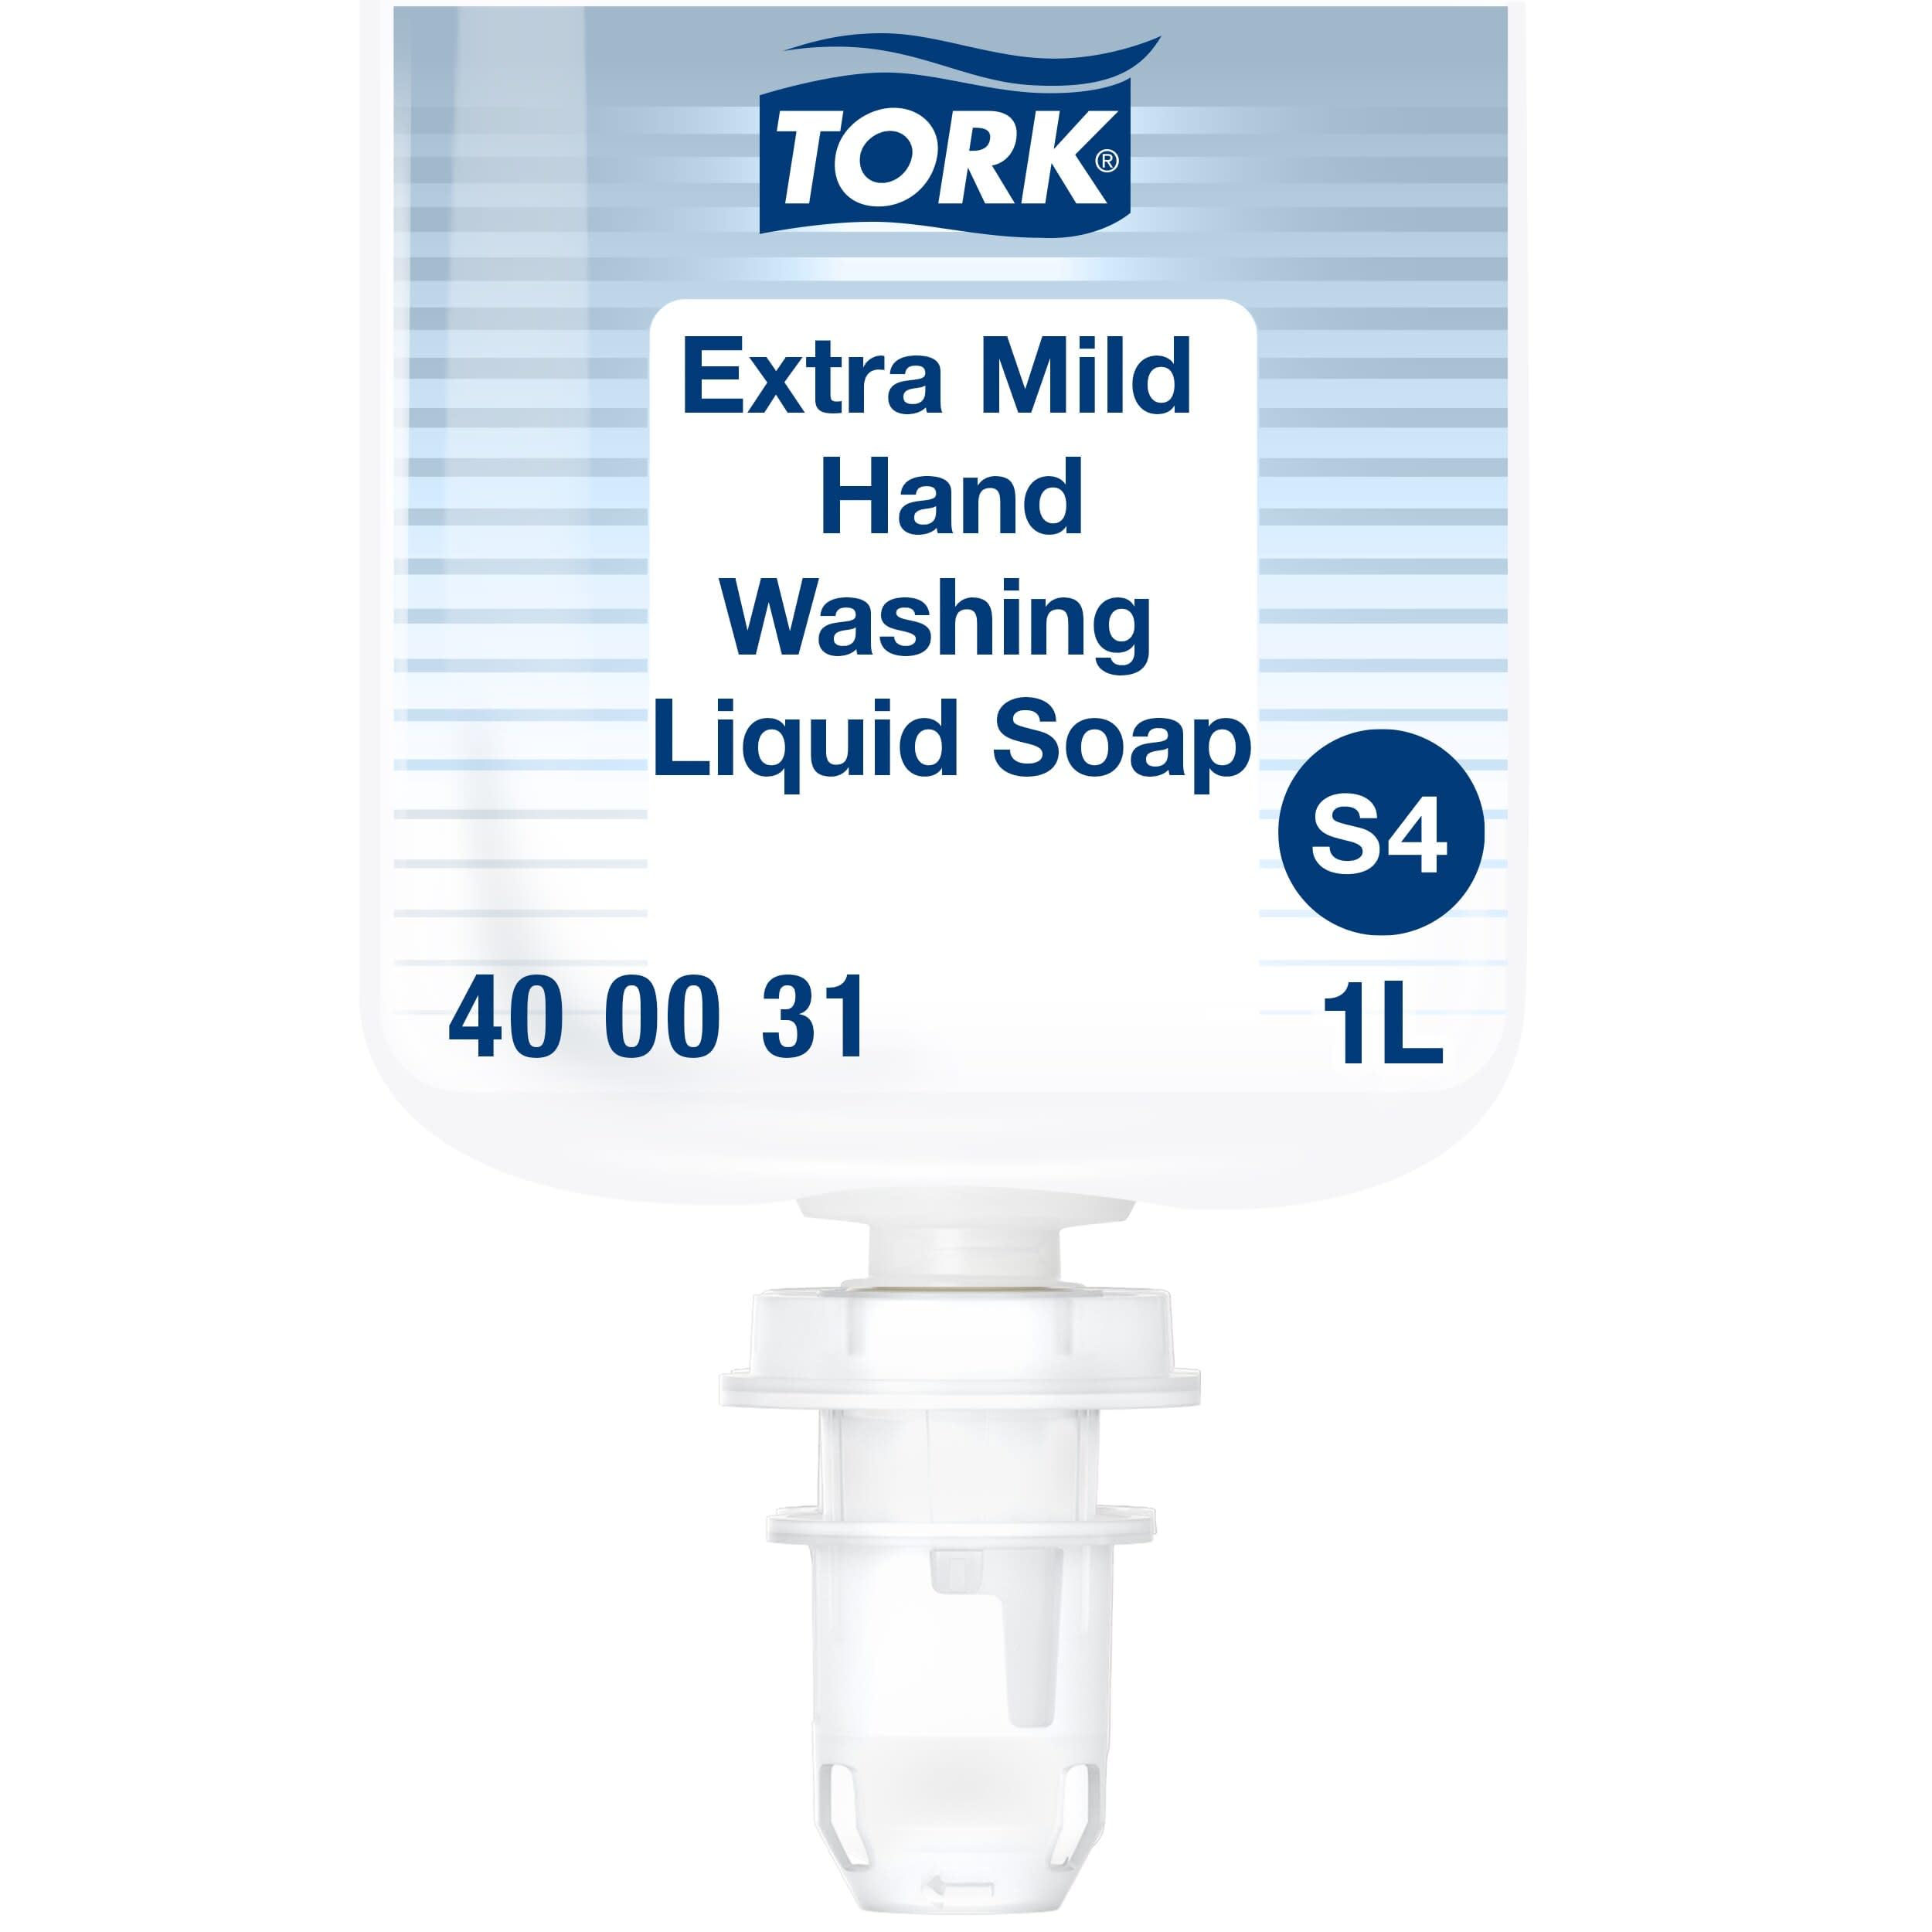 Tork Extra Mild Hand Washing Liquid Soap S4, No Fragrance Added, 6 x 1L, 400031